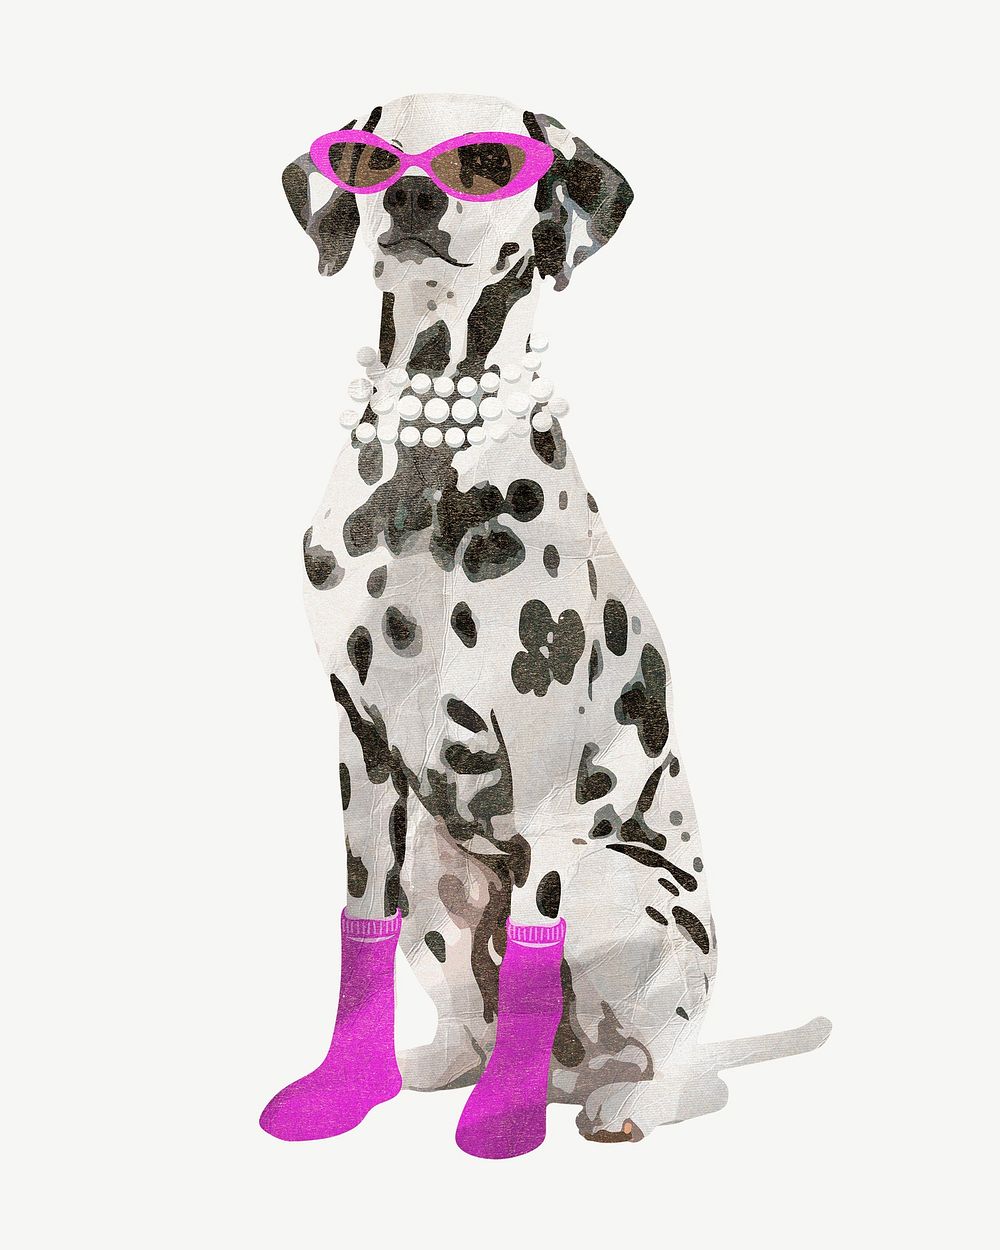 Fashionable Dalmatian dog, pet animal collage element psd